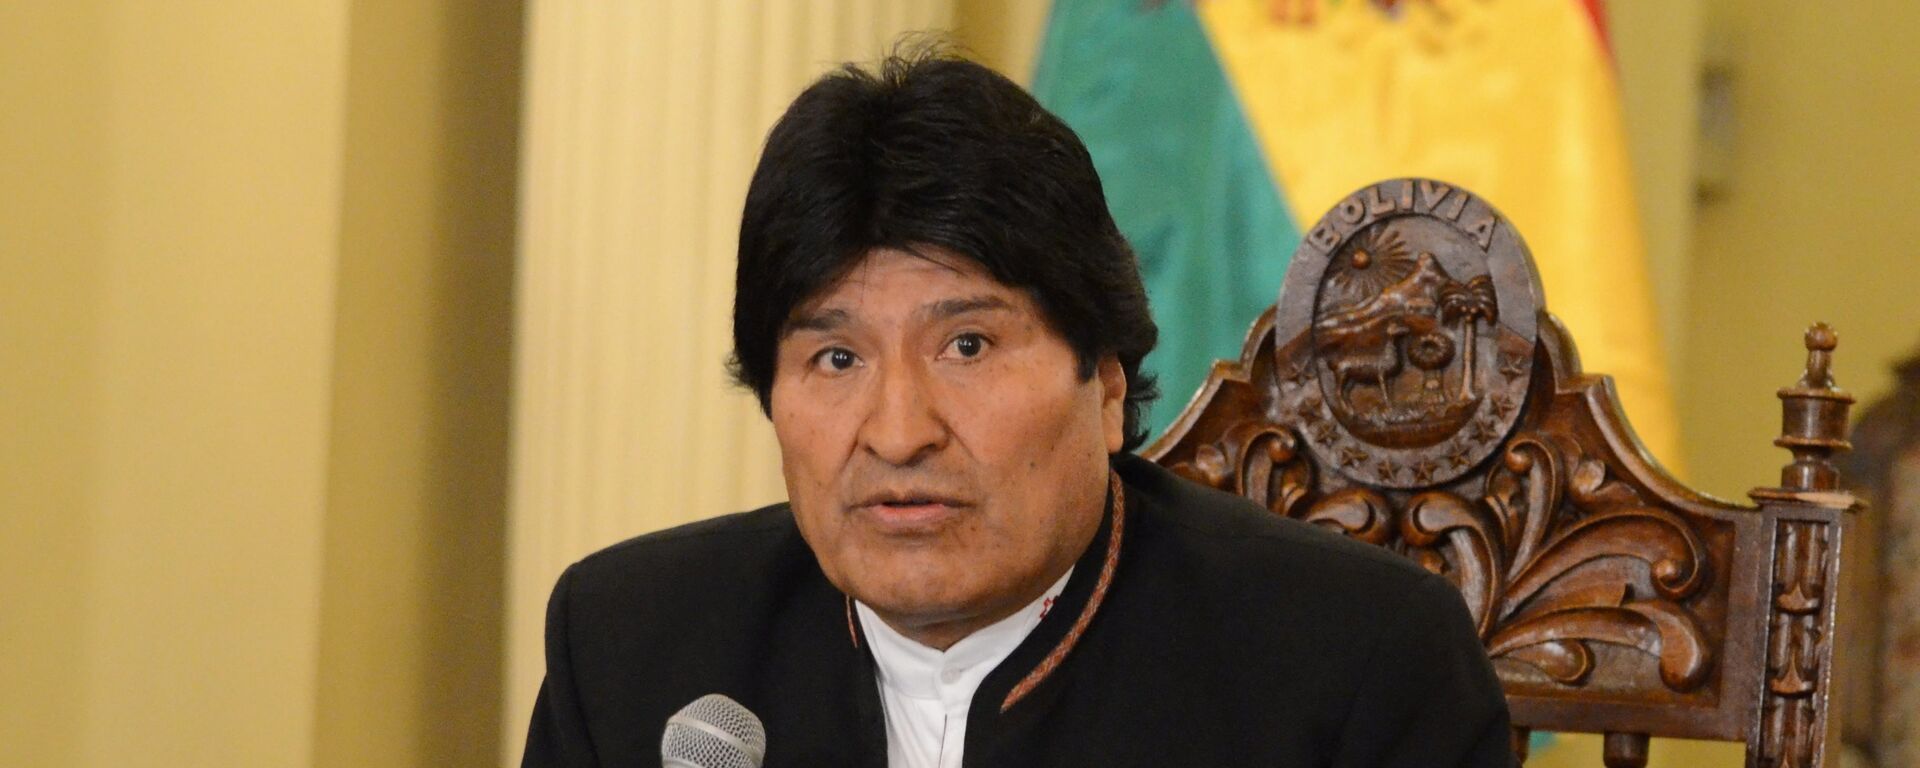 Evo Morales, presidente de Bolivia - Sputnik Mundo, 1920, 05.10.2017